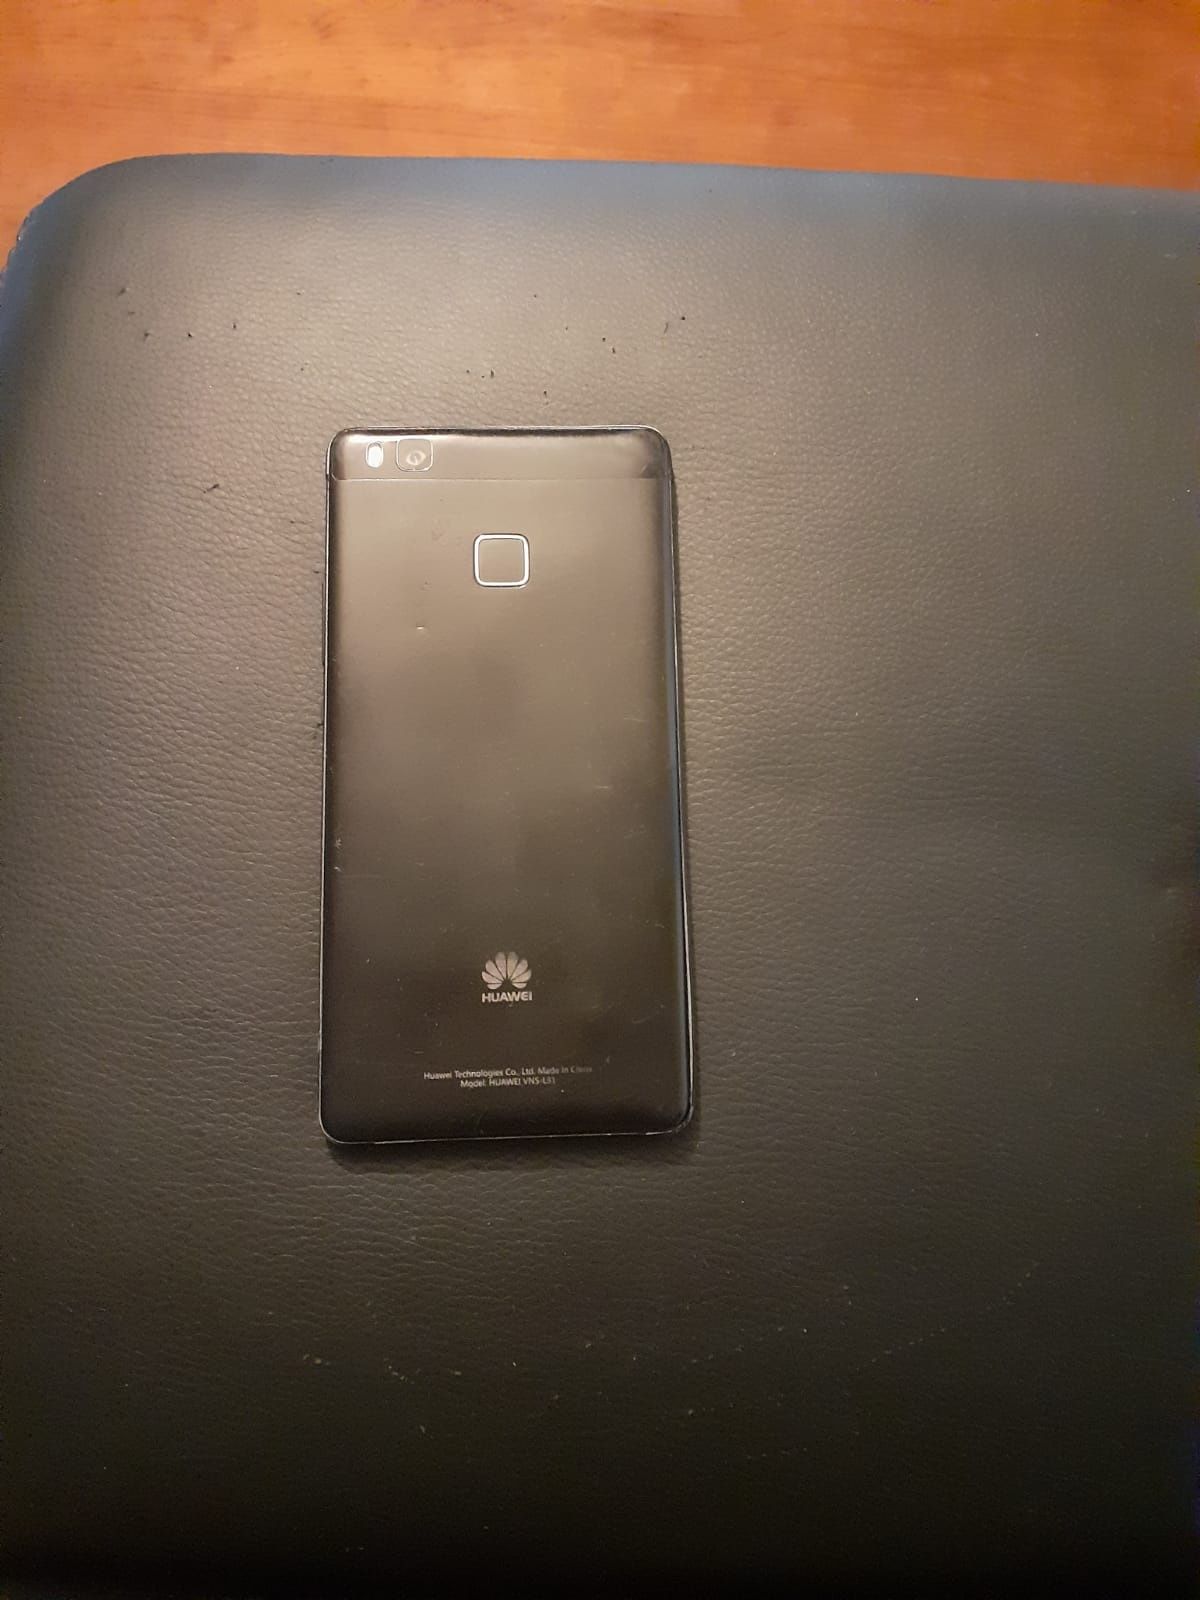 Telemóvel Huawei P9 lite